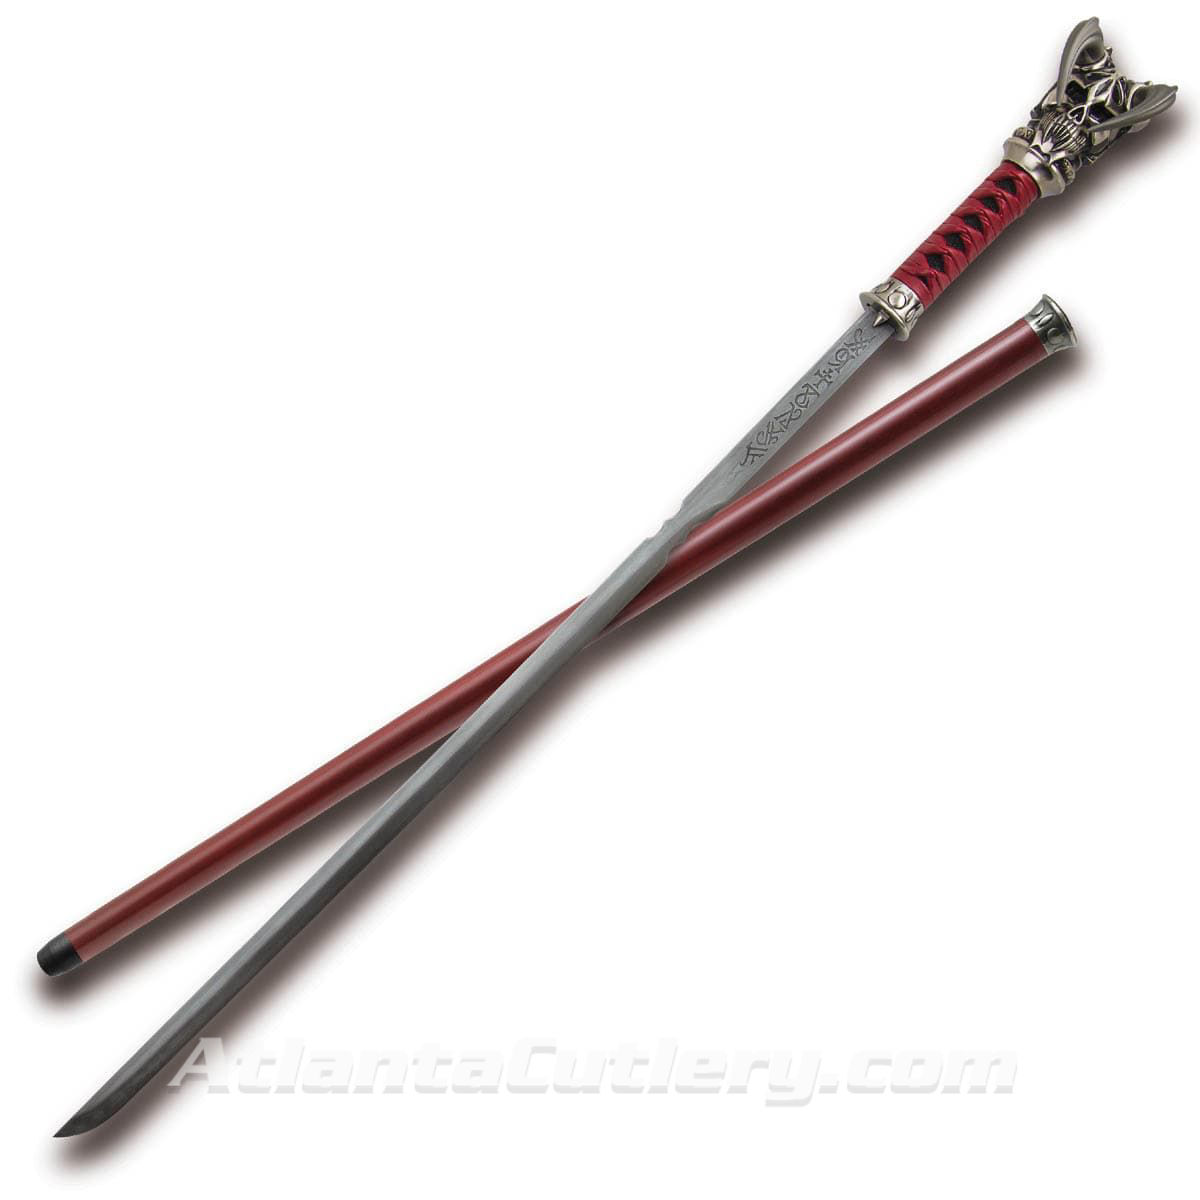 Kit Rae Vorthelok Sword Cane with folded Damascus blade, cast metal pommel and wood shaft